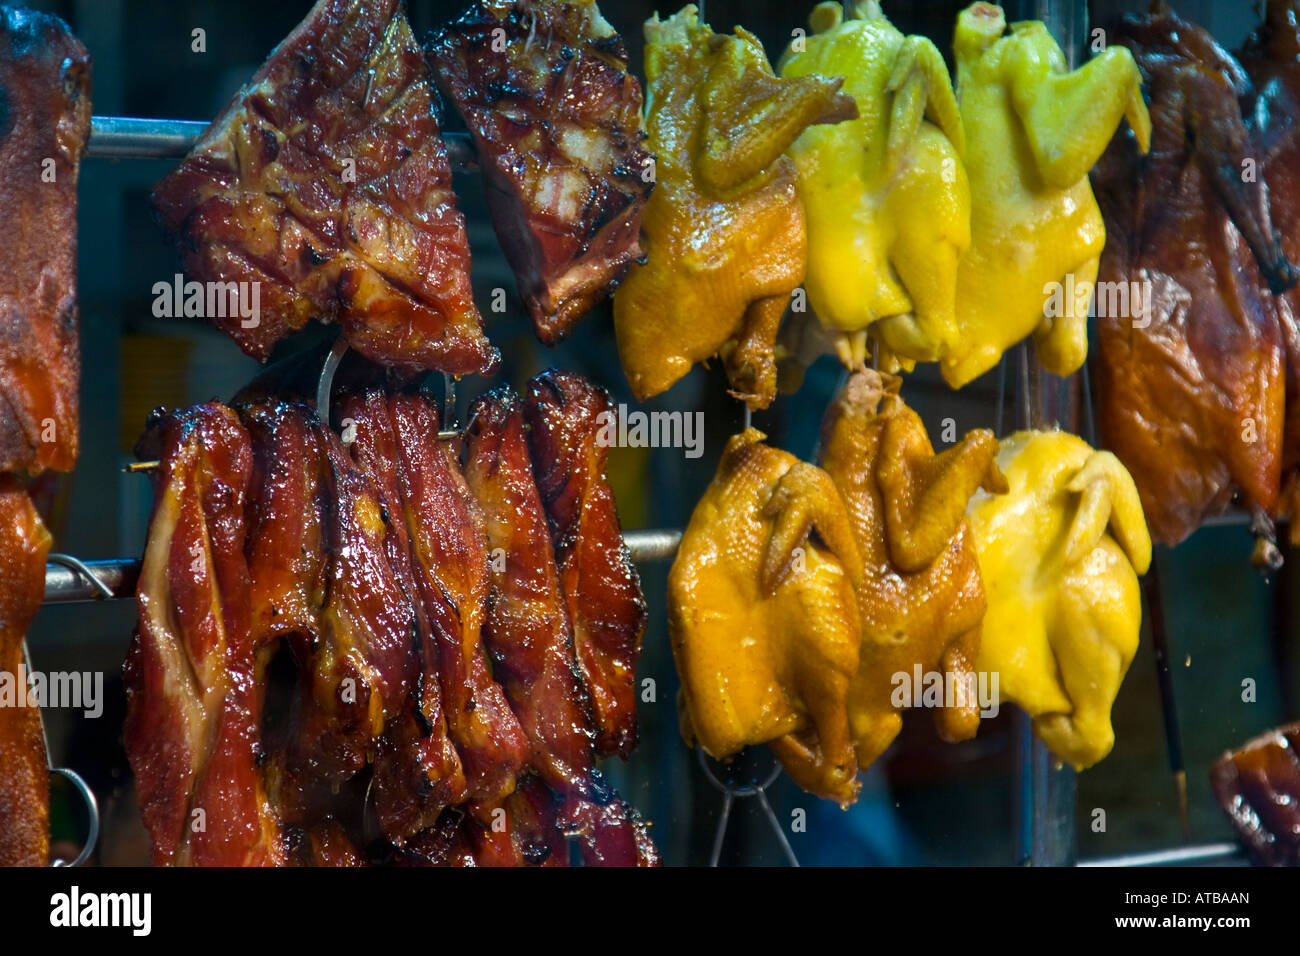 Barbecued Pork and Chicken at a Hong Kong Restaurant Stock Photo